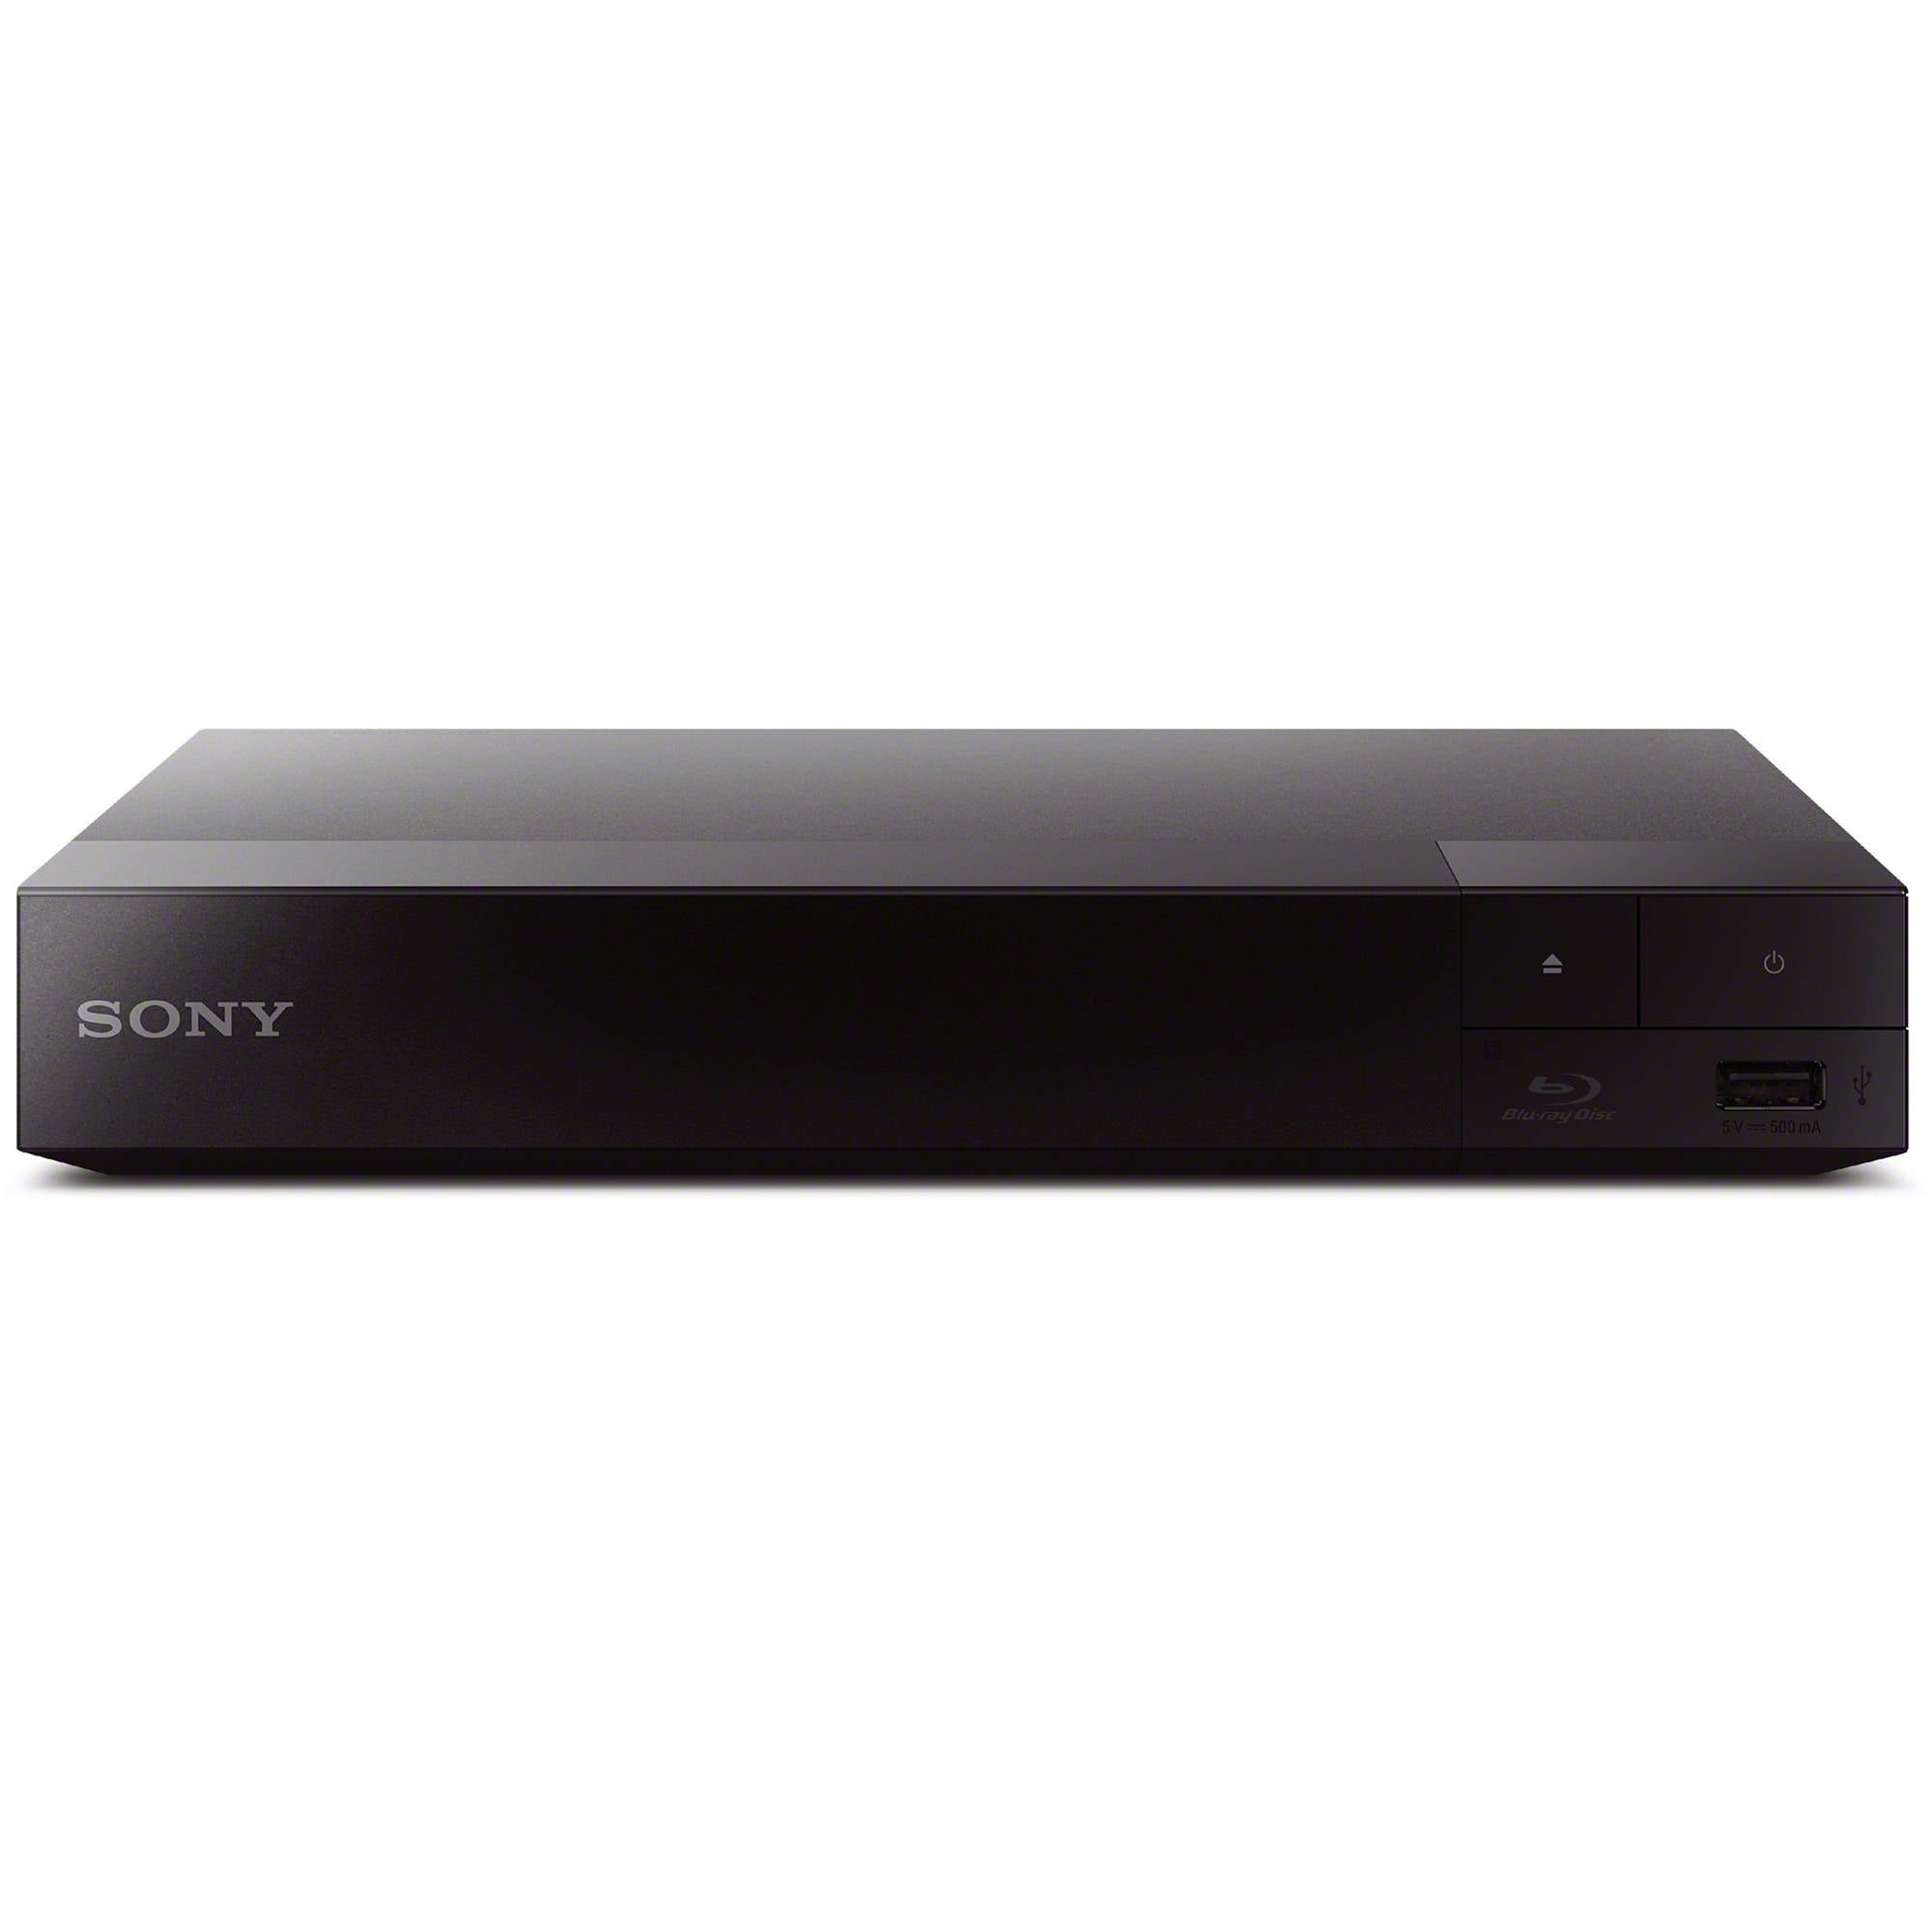 letal girasol Incierto Sony Streaming Blu-ray Disc Player with Built-in Wi-Fi - BDP-S3700 -  Walmart.com